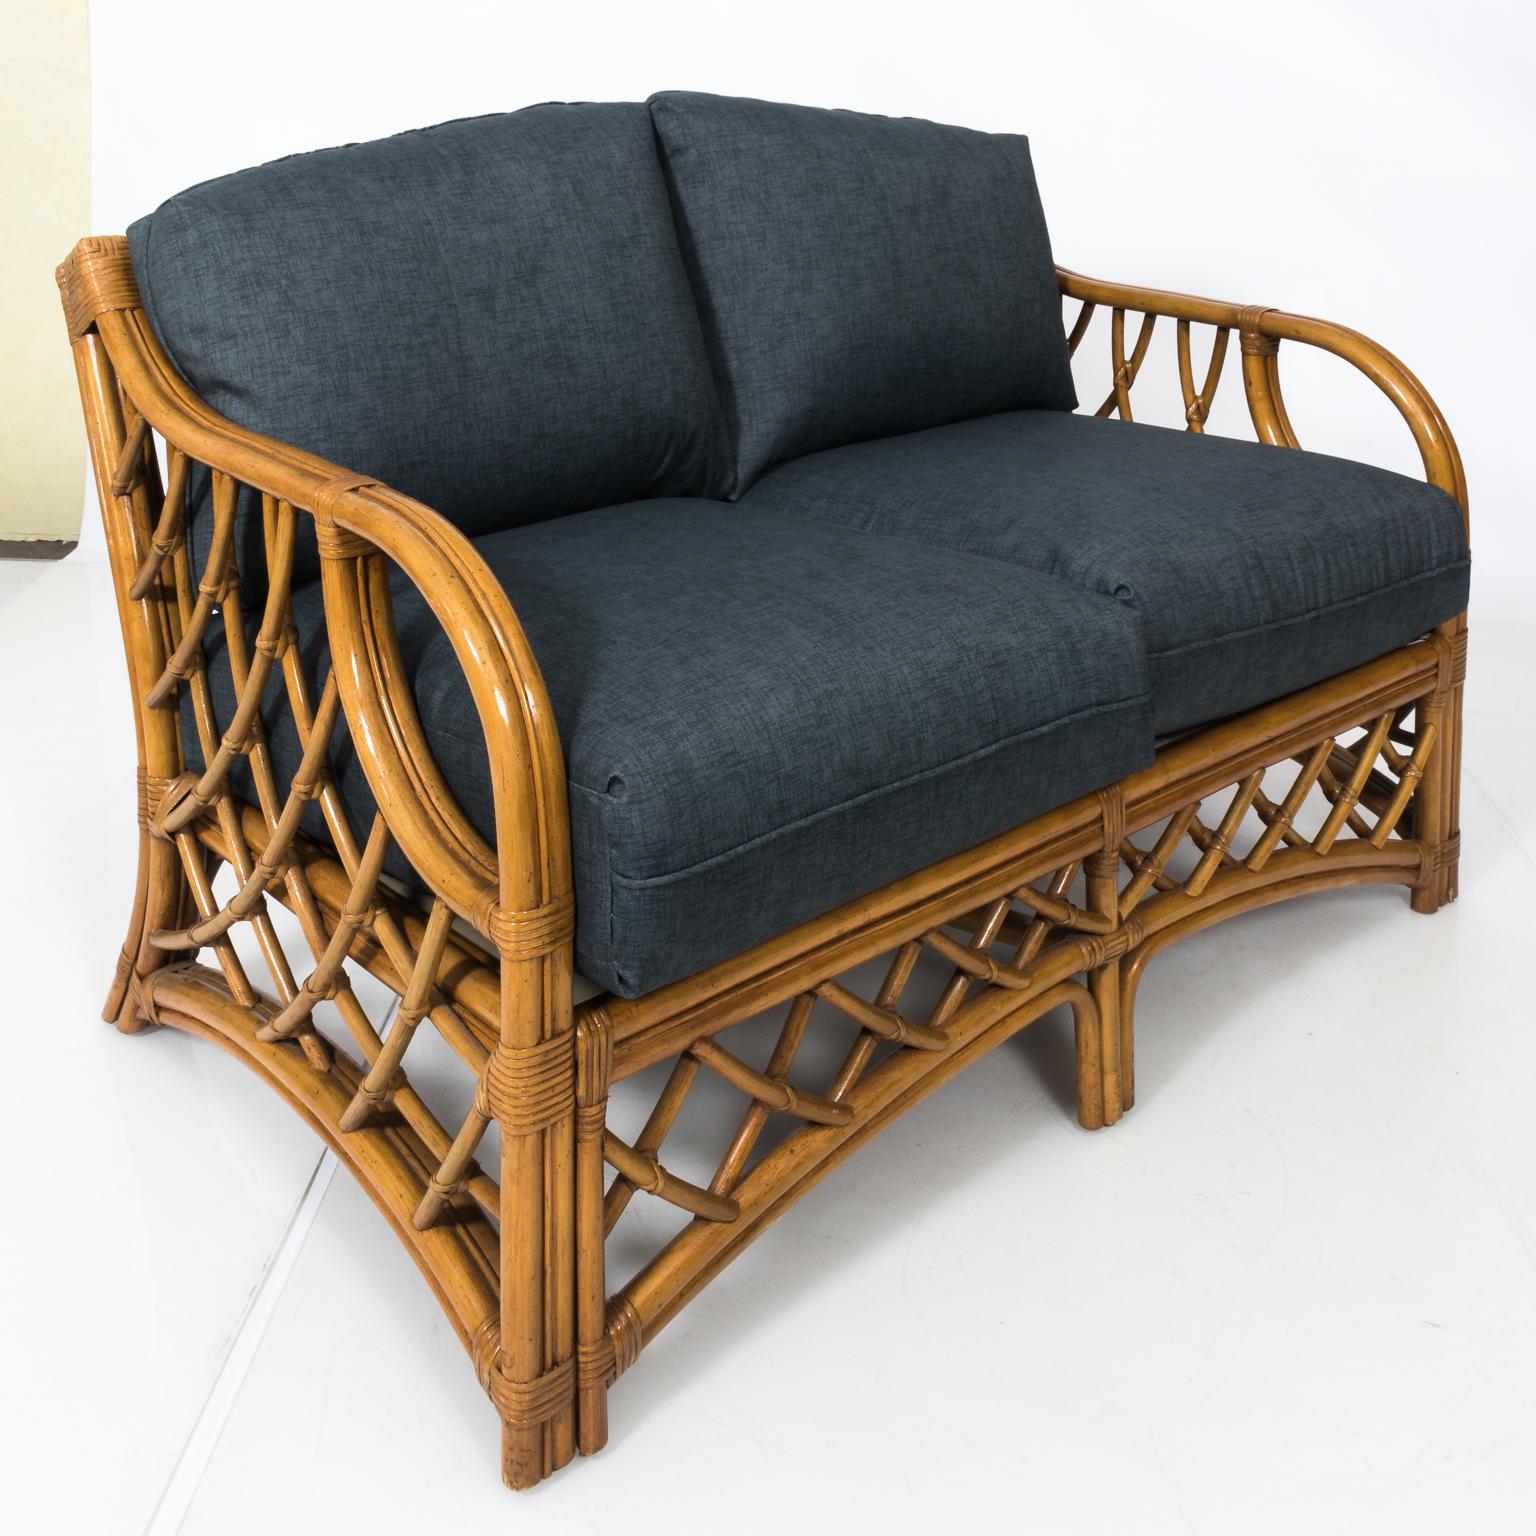 vintage rattan bamboo furniture -china -b2b -forum -blog -wikipedia -.cn -.gov -alibaba